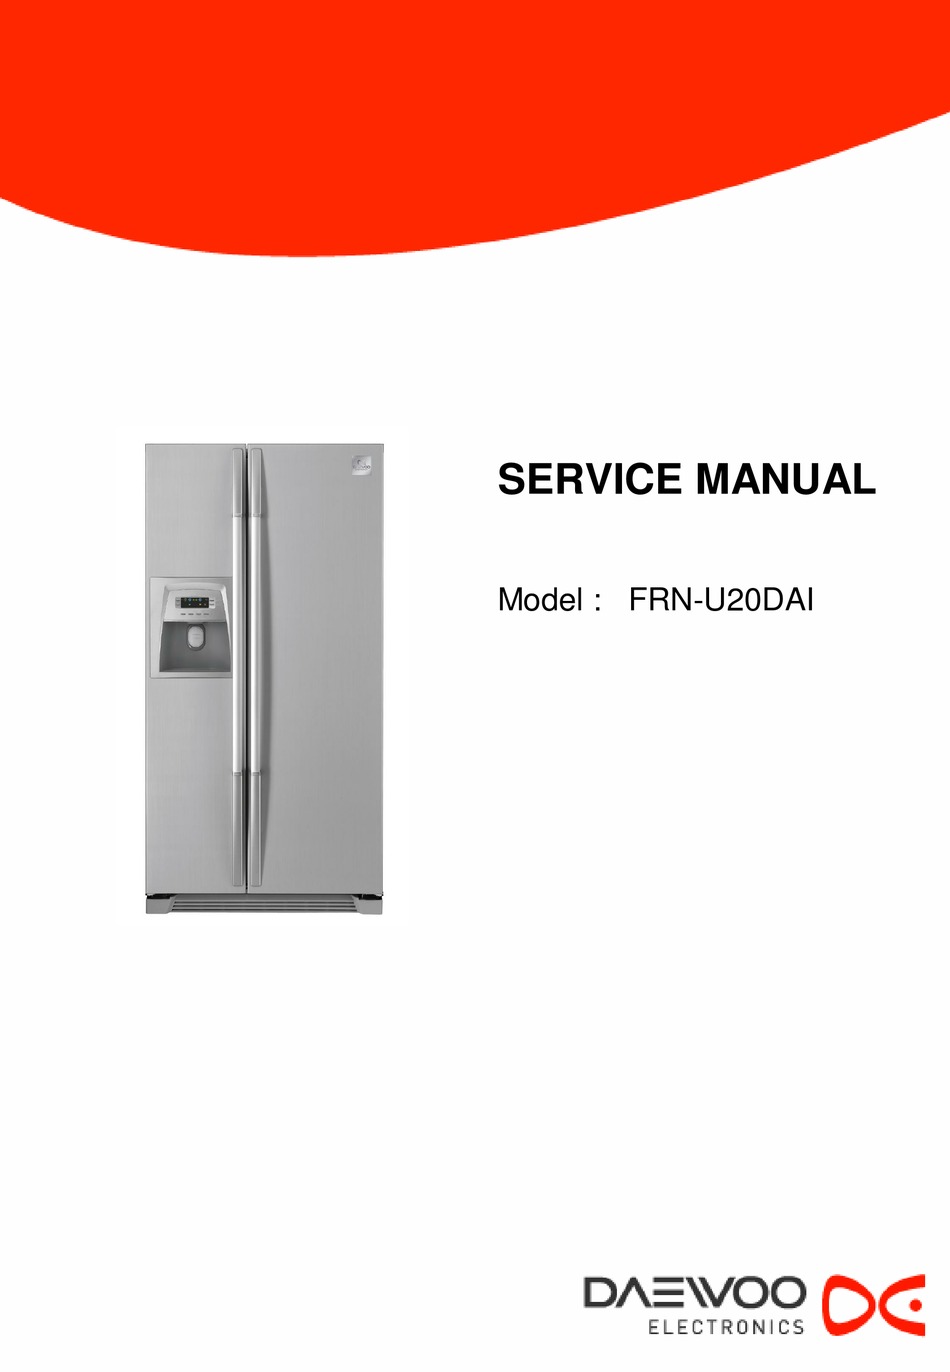 DAEWOO FRN-U20DAI SERVICE MANUAL Pdf Download | ManualsLib